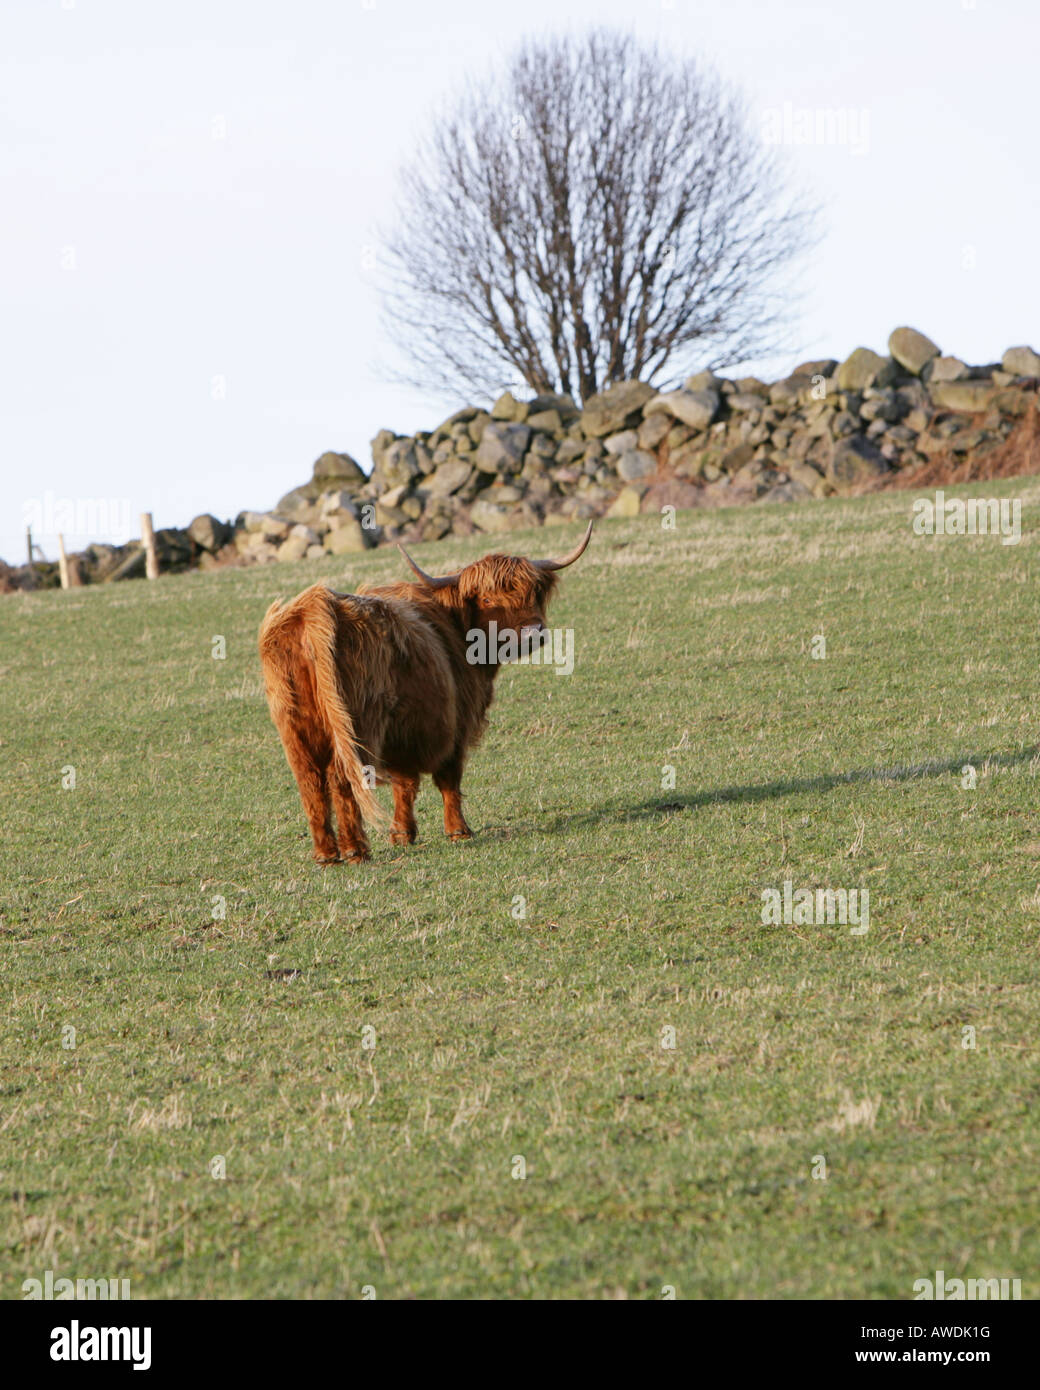 A Highland cow grazing in a field with big horns near Aberdeen, Scotland Stock Photo